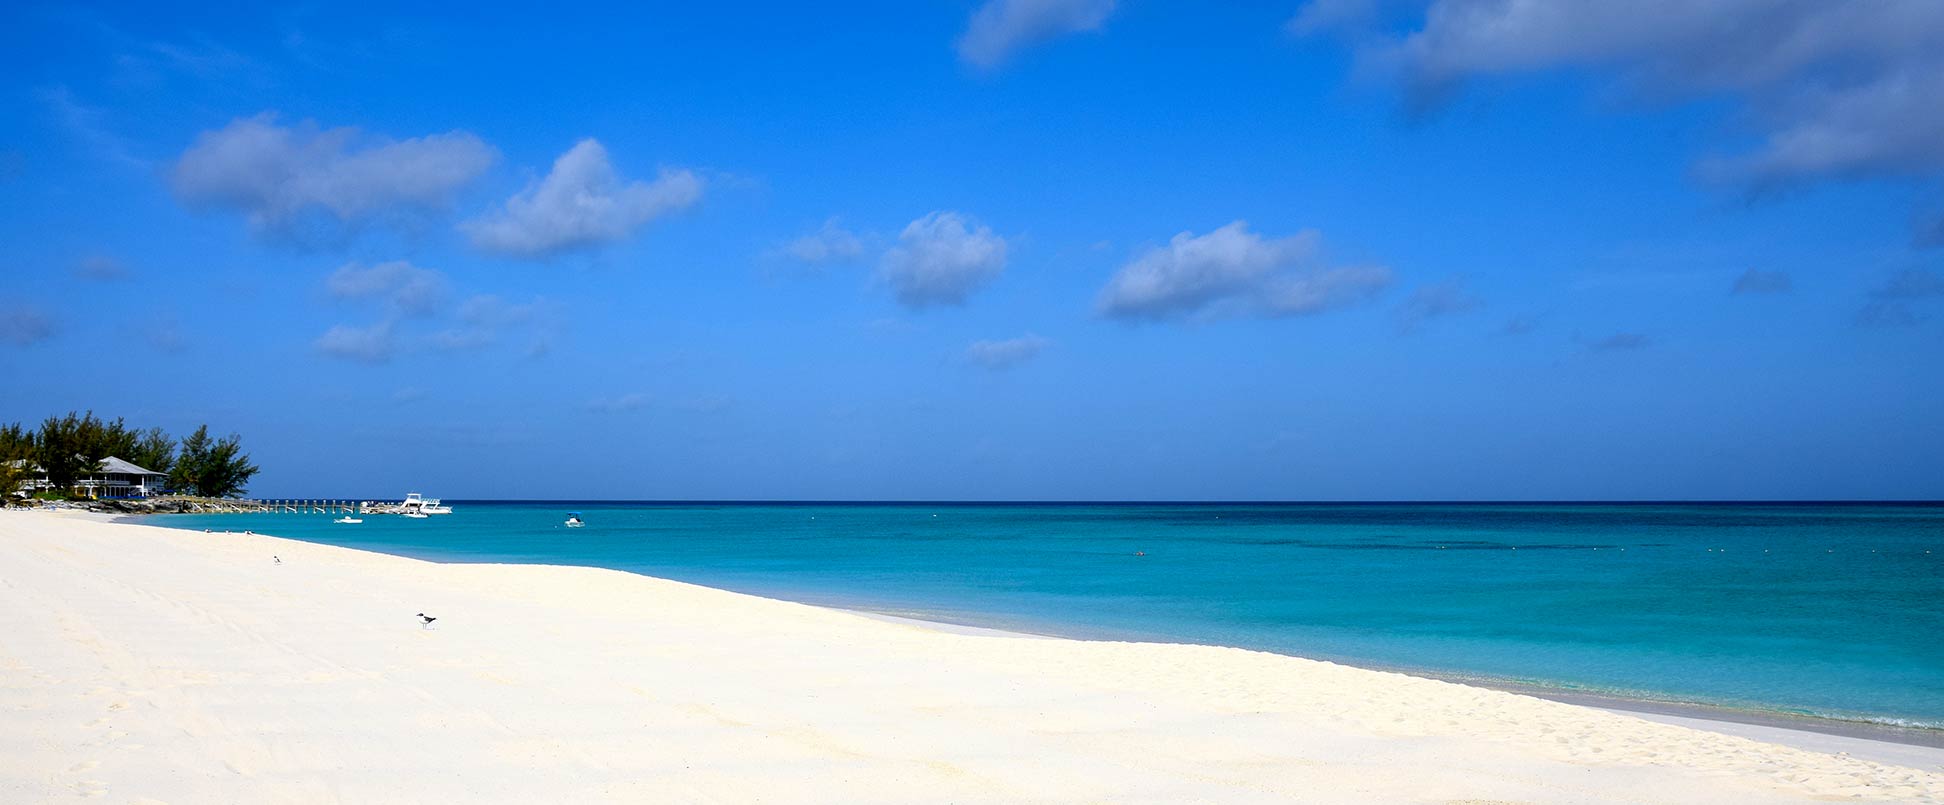 San Salvador Island, landing place of Christopher Columbus in the Bahamas